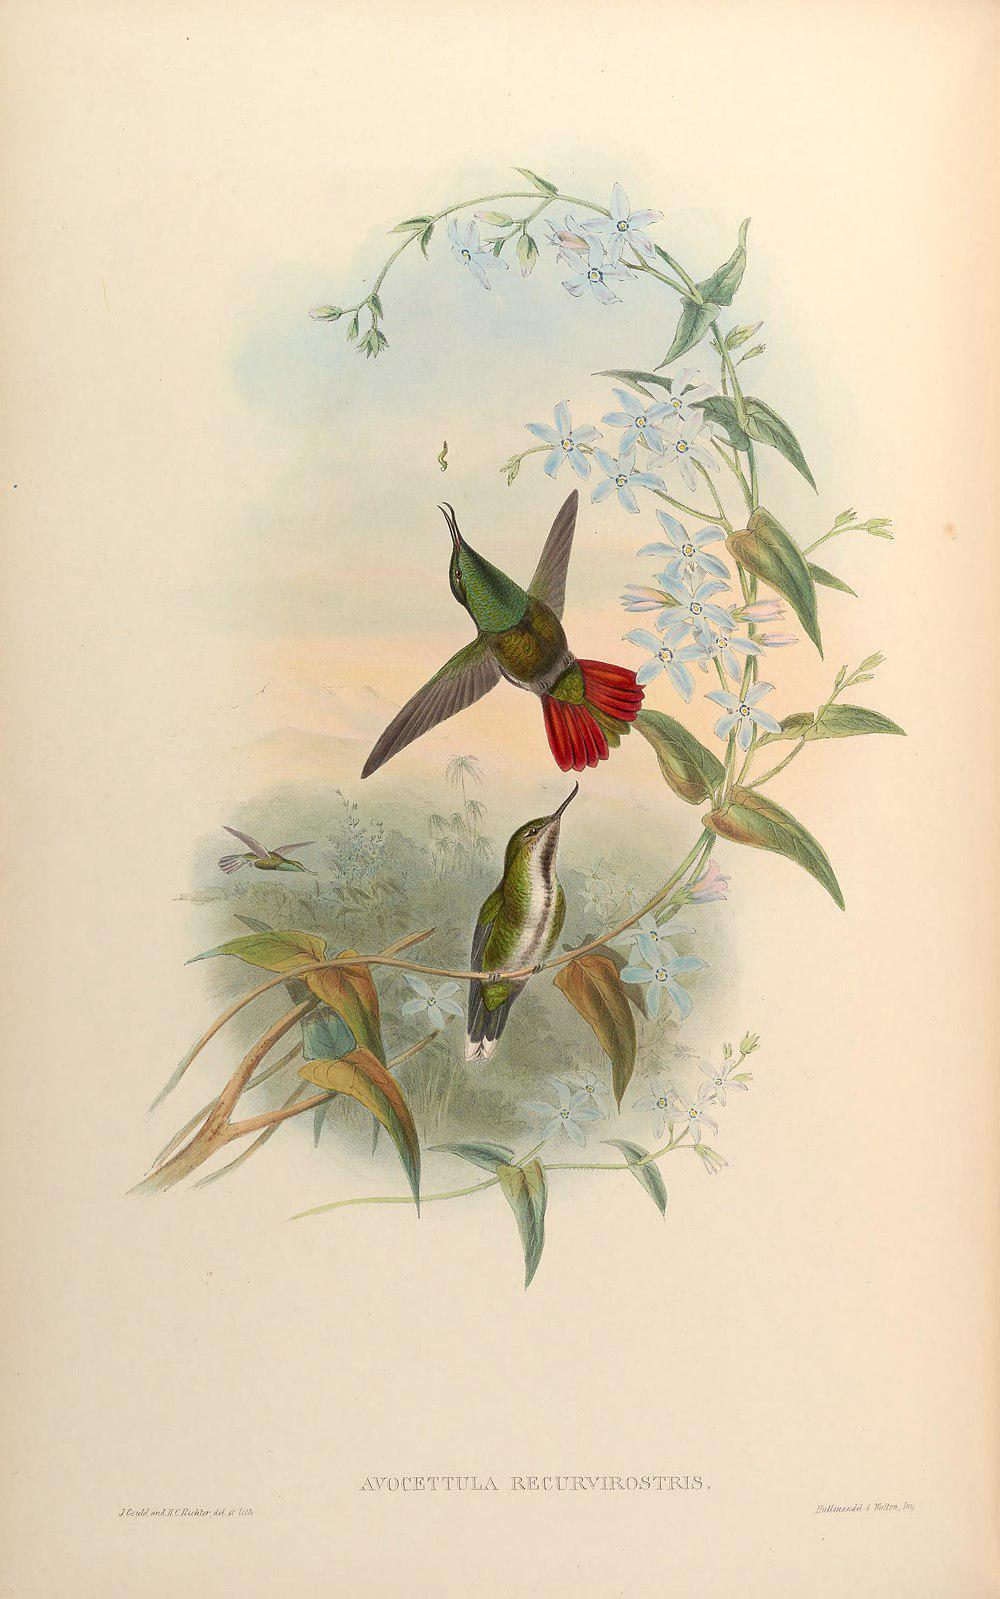 翘嘴蜂鸟 / Fiery-tailed Awlbill / Avocettula recurvirostris